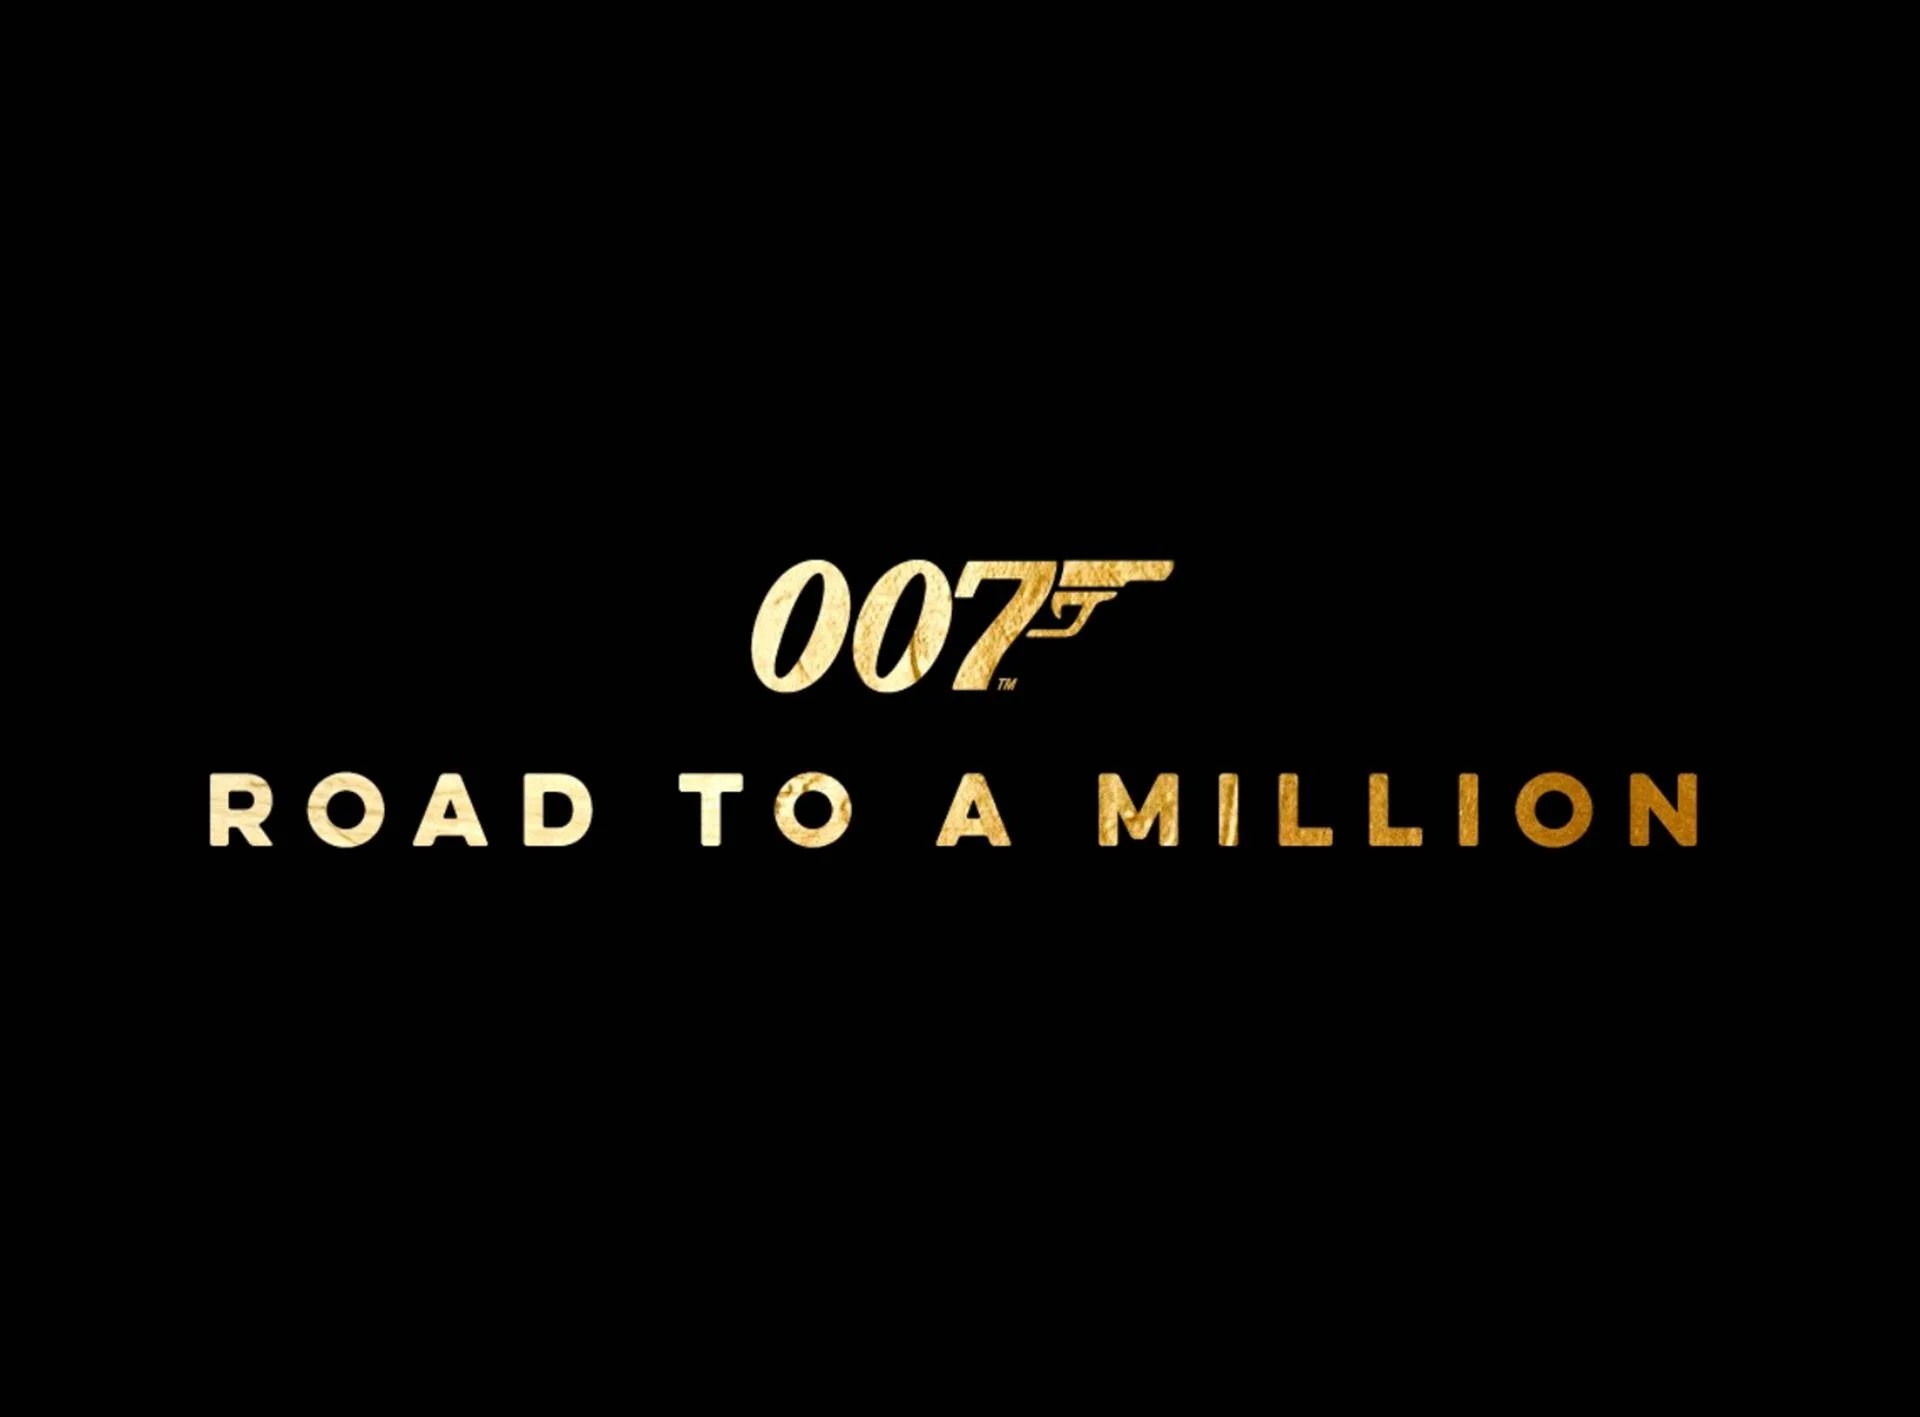 James Bond 007 Logo copy by FeatherOfConfidence on DeviantArt